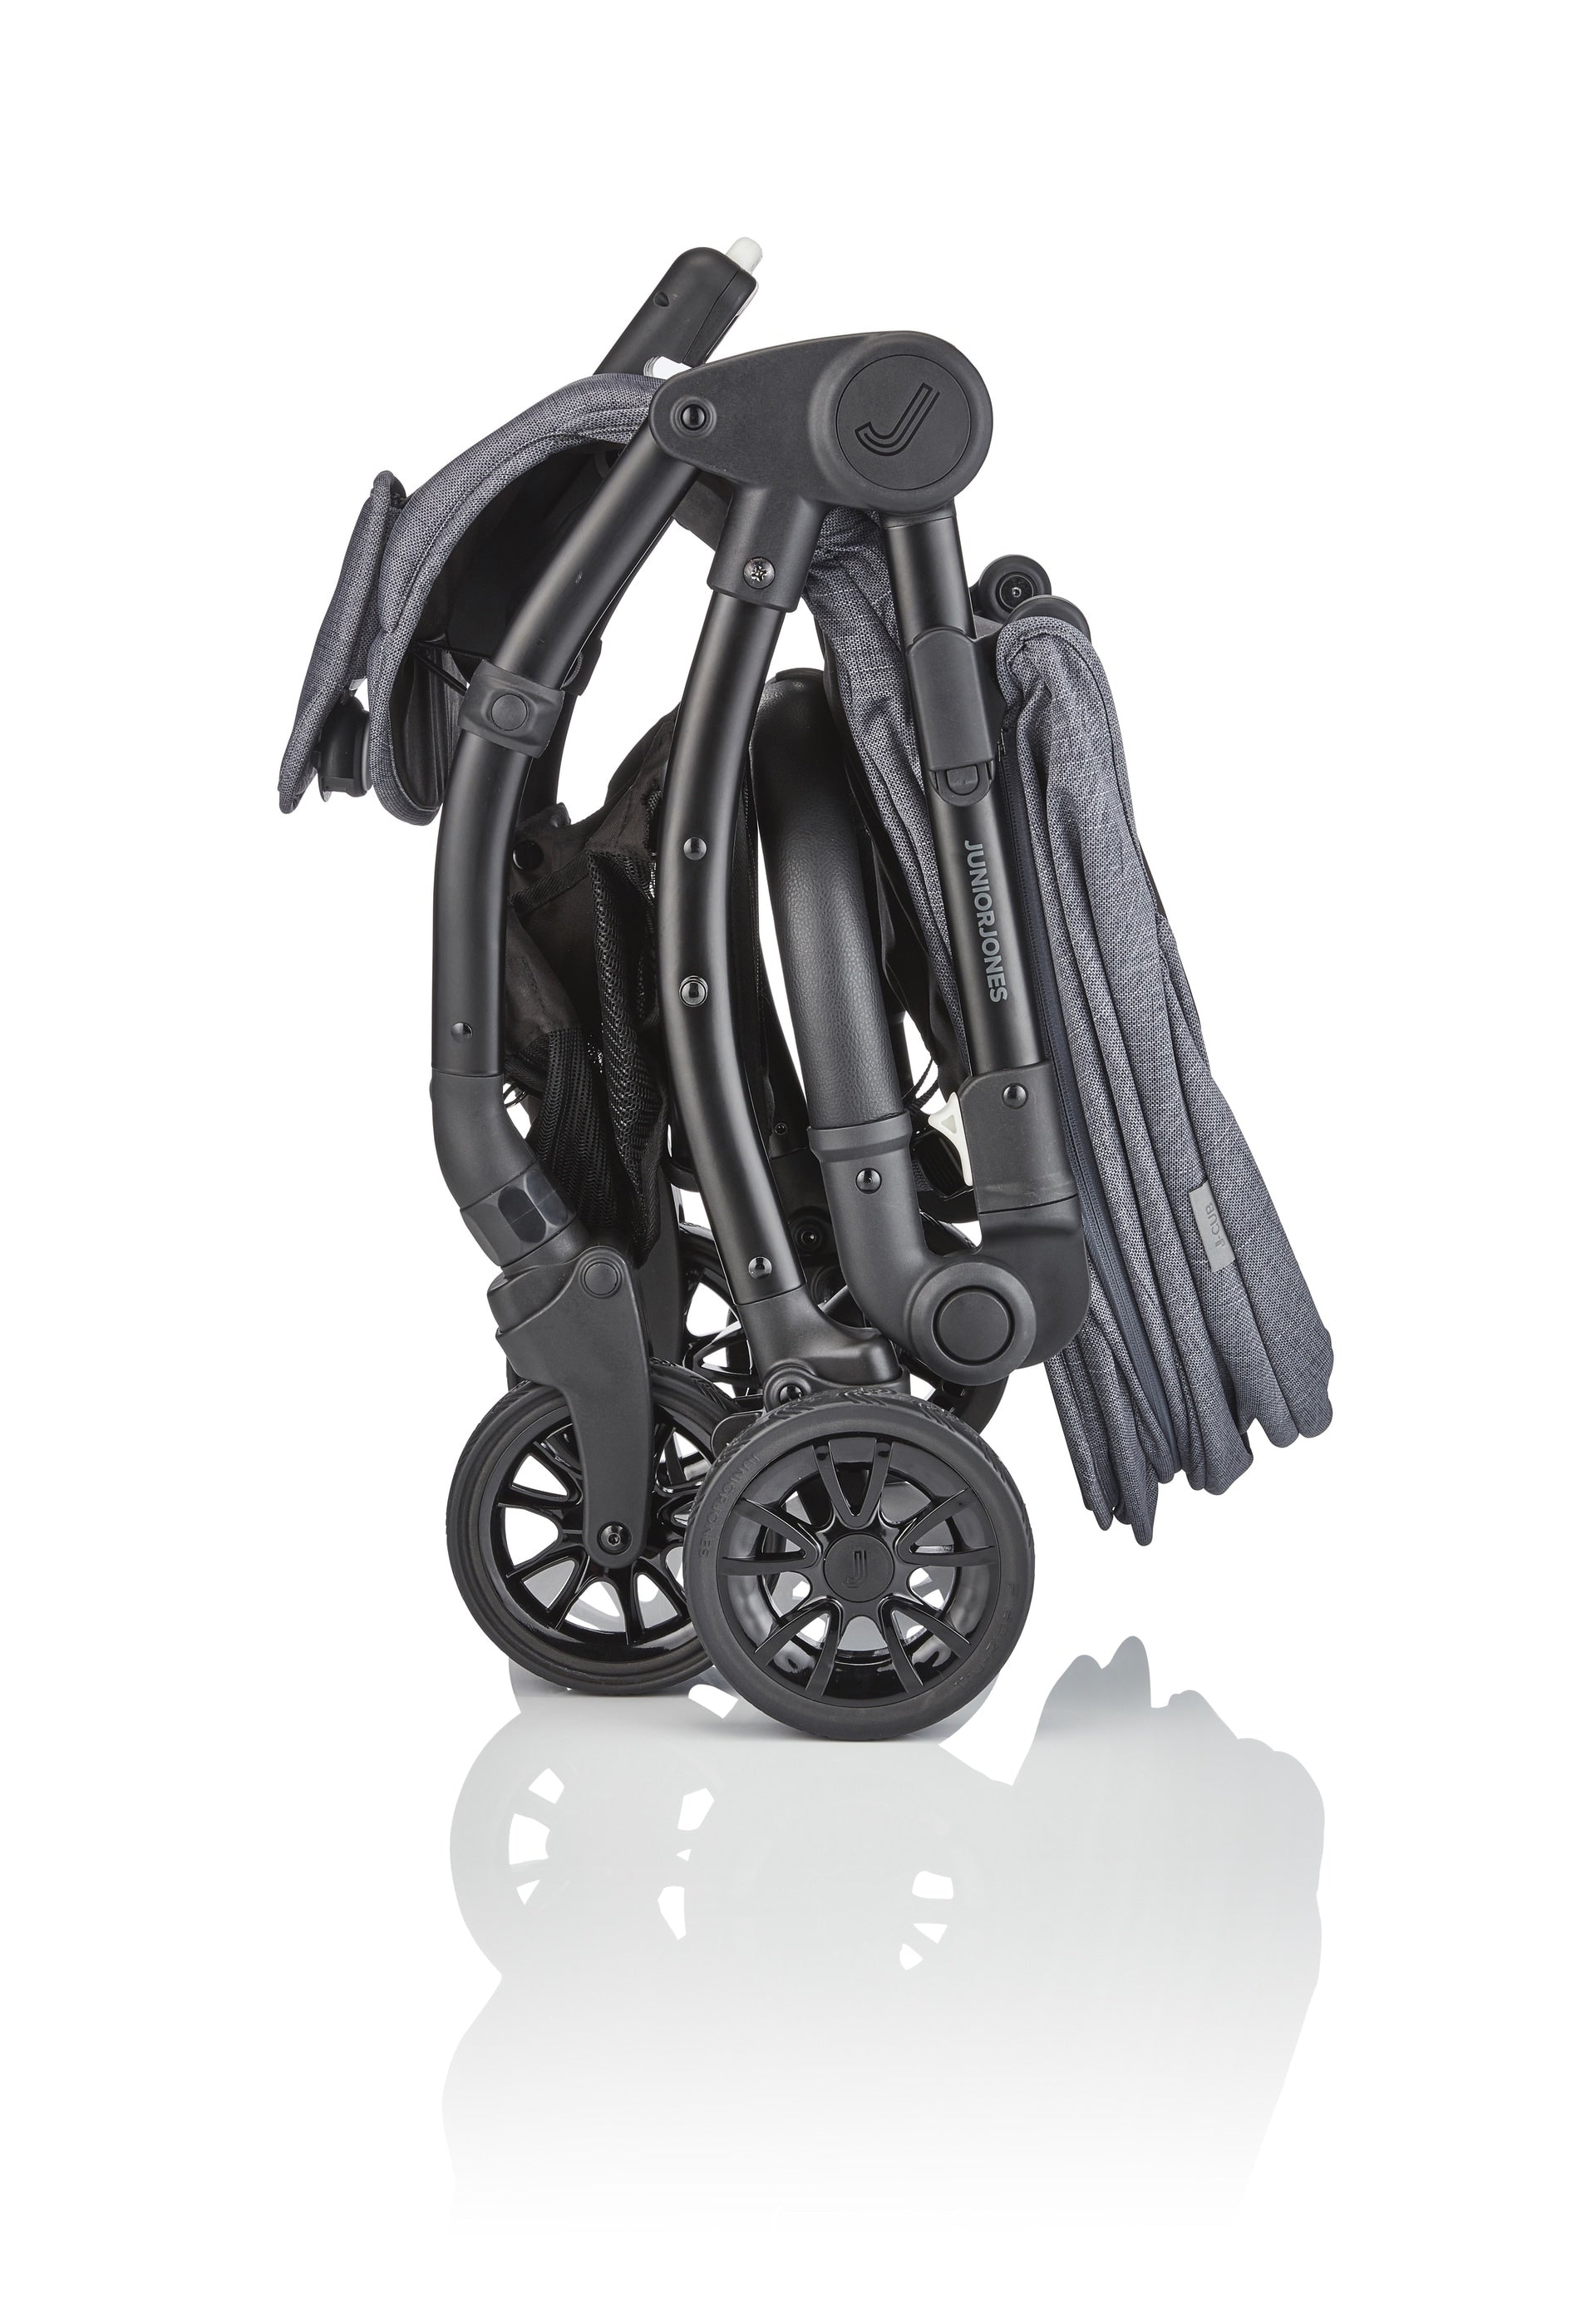 Junior Jones J-Cub Compact Stroller